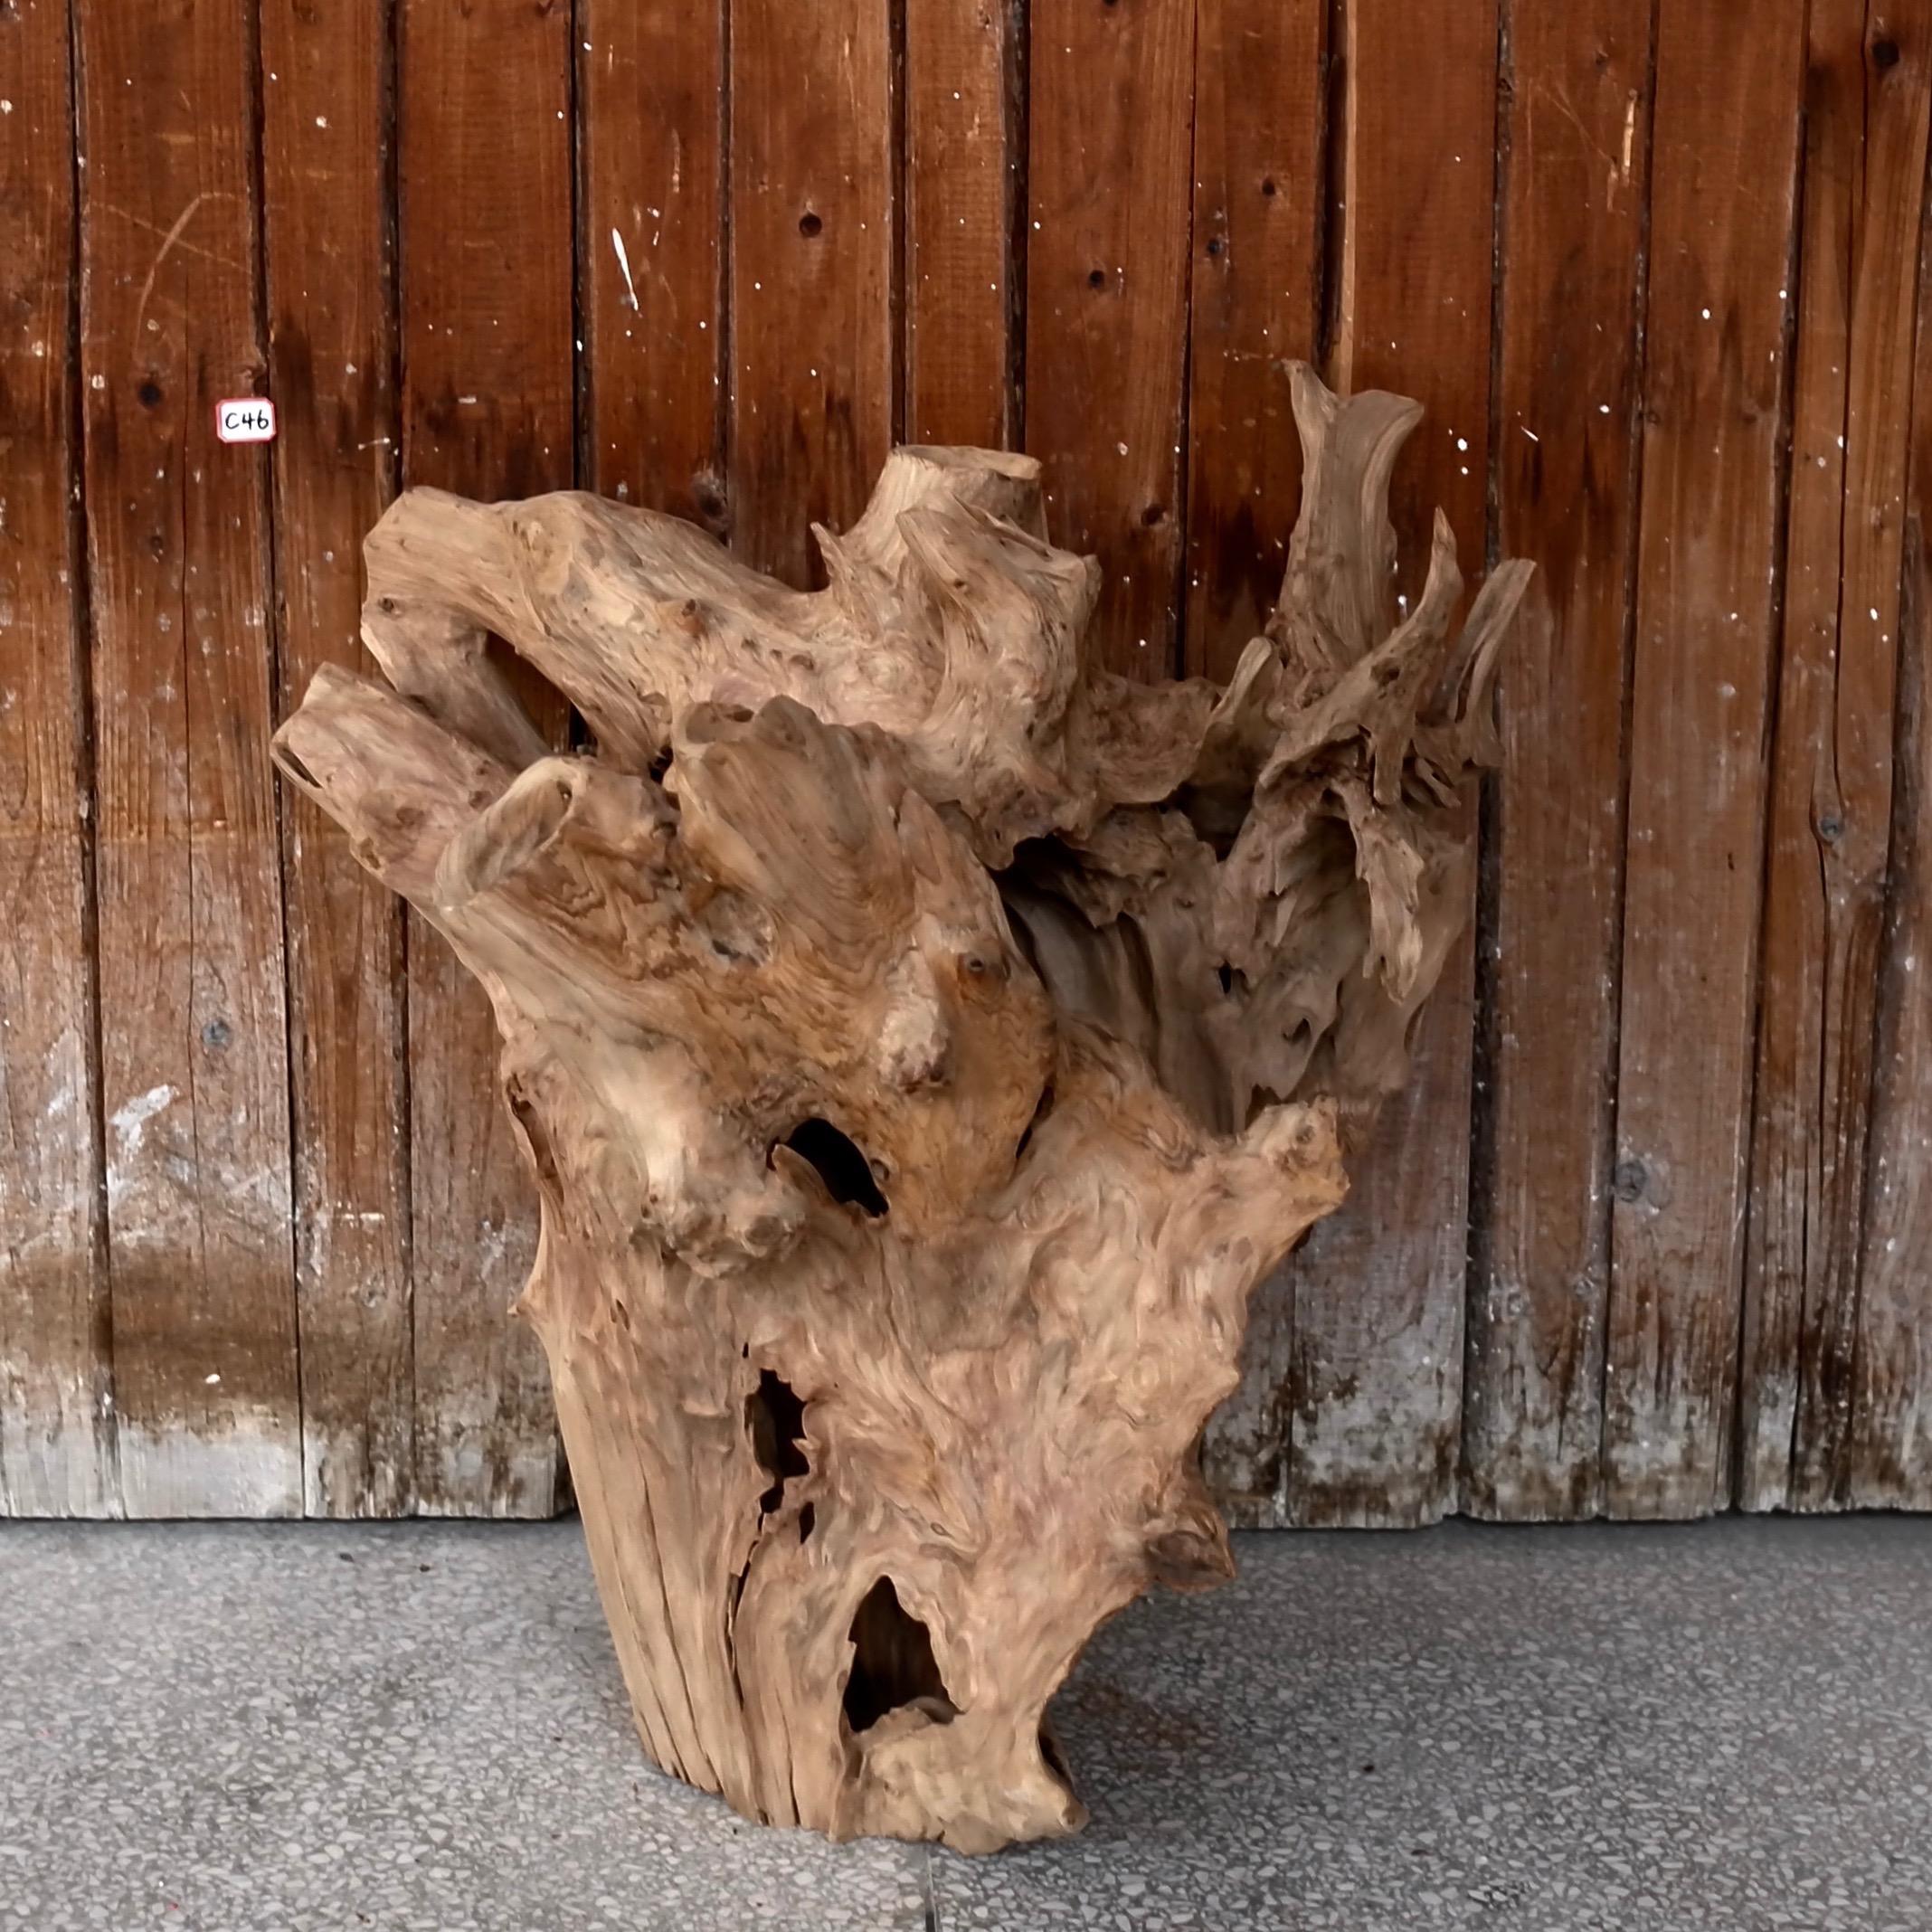 Natural wood sculpture reminiscent of a stylized shield 20” x 23” x 23”
an organic sculpture for the modern scholar's desk.